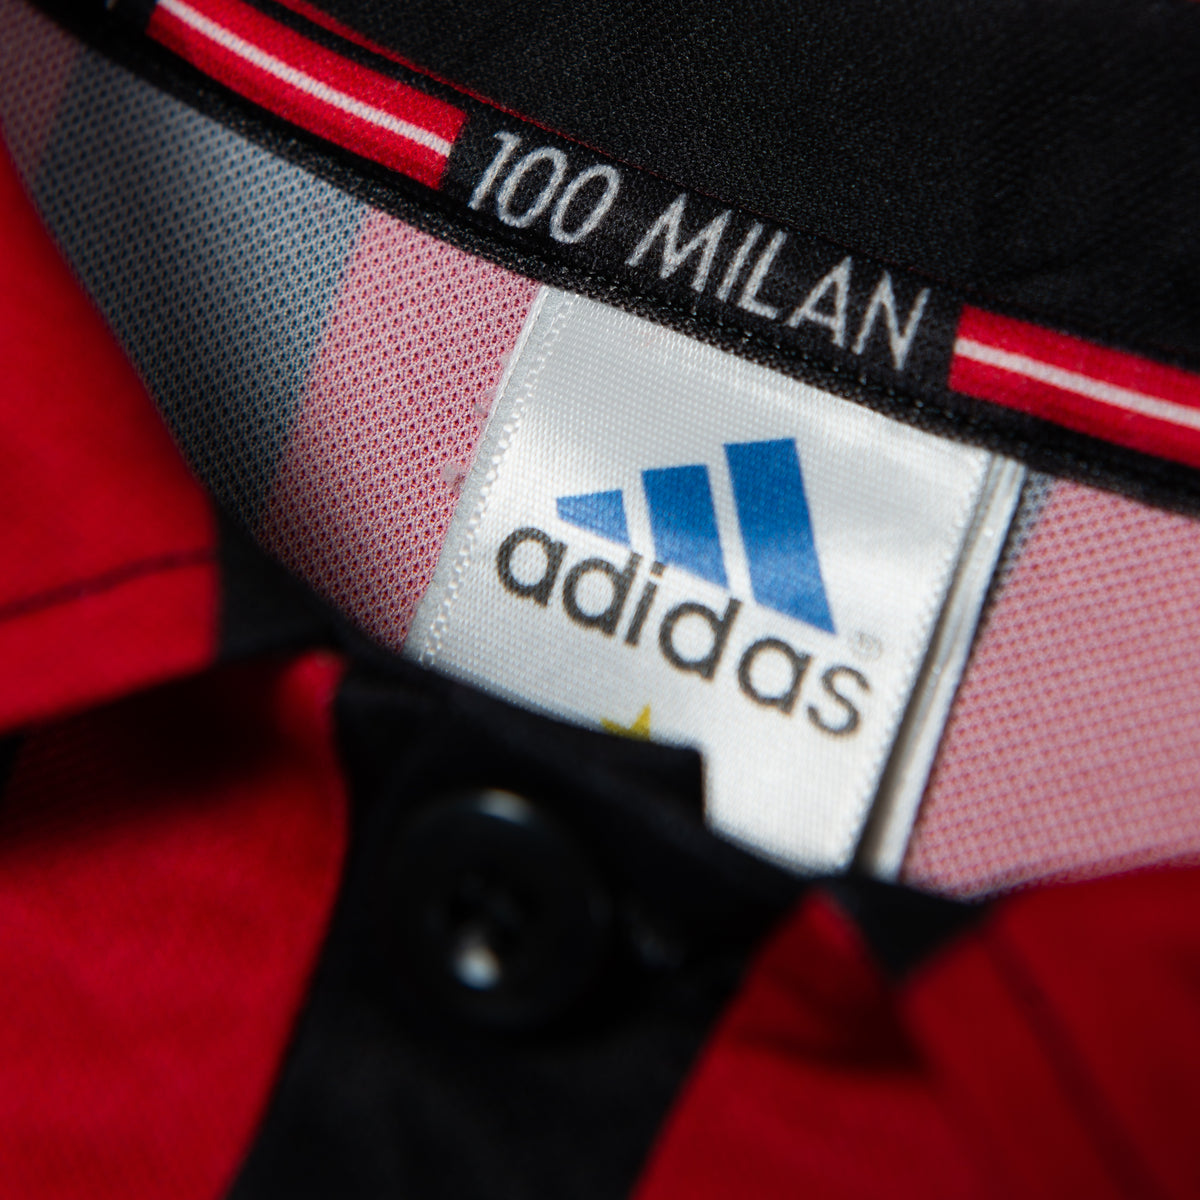 1999-2000 AC Milan Adidas Home Shirt